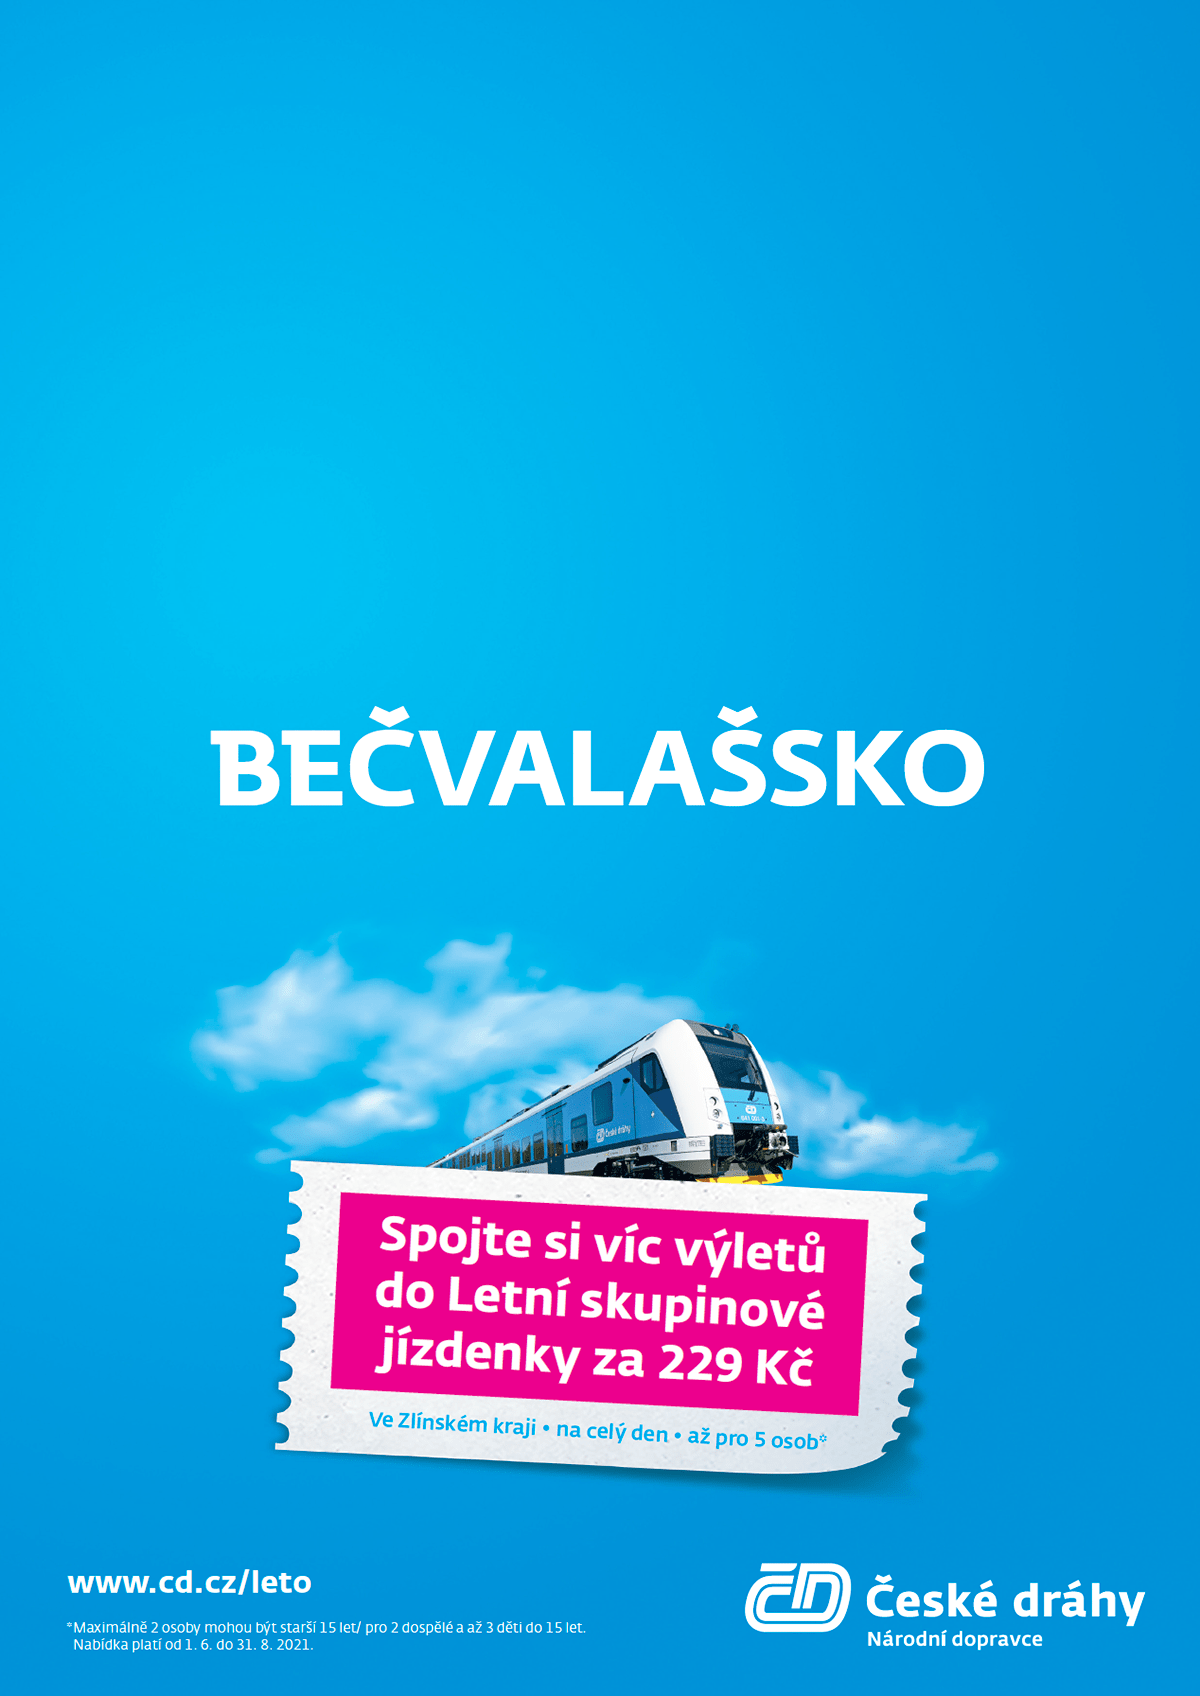 Advertising  Czech railways print